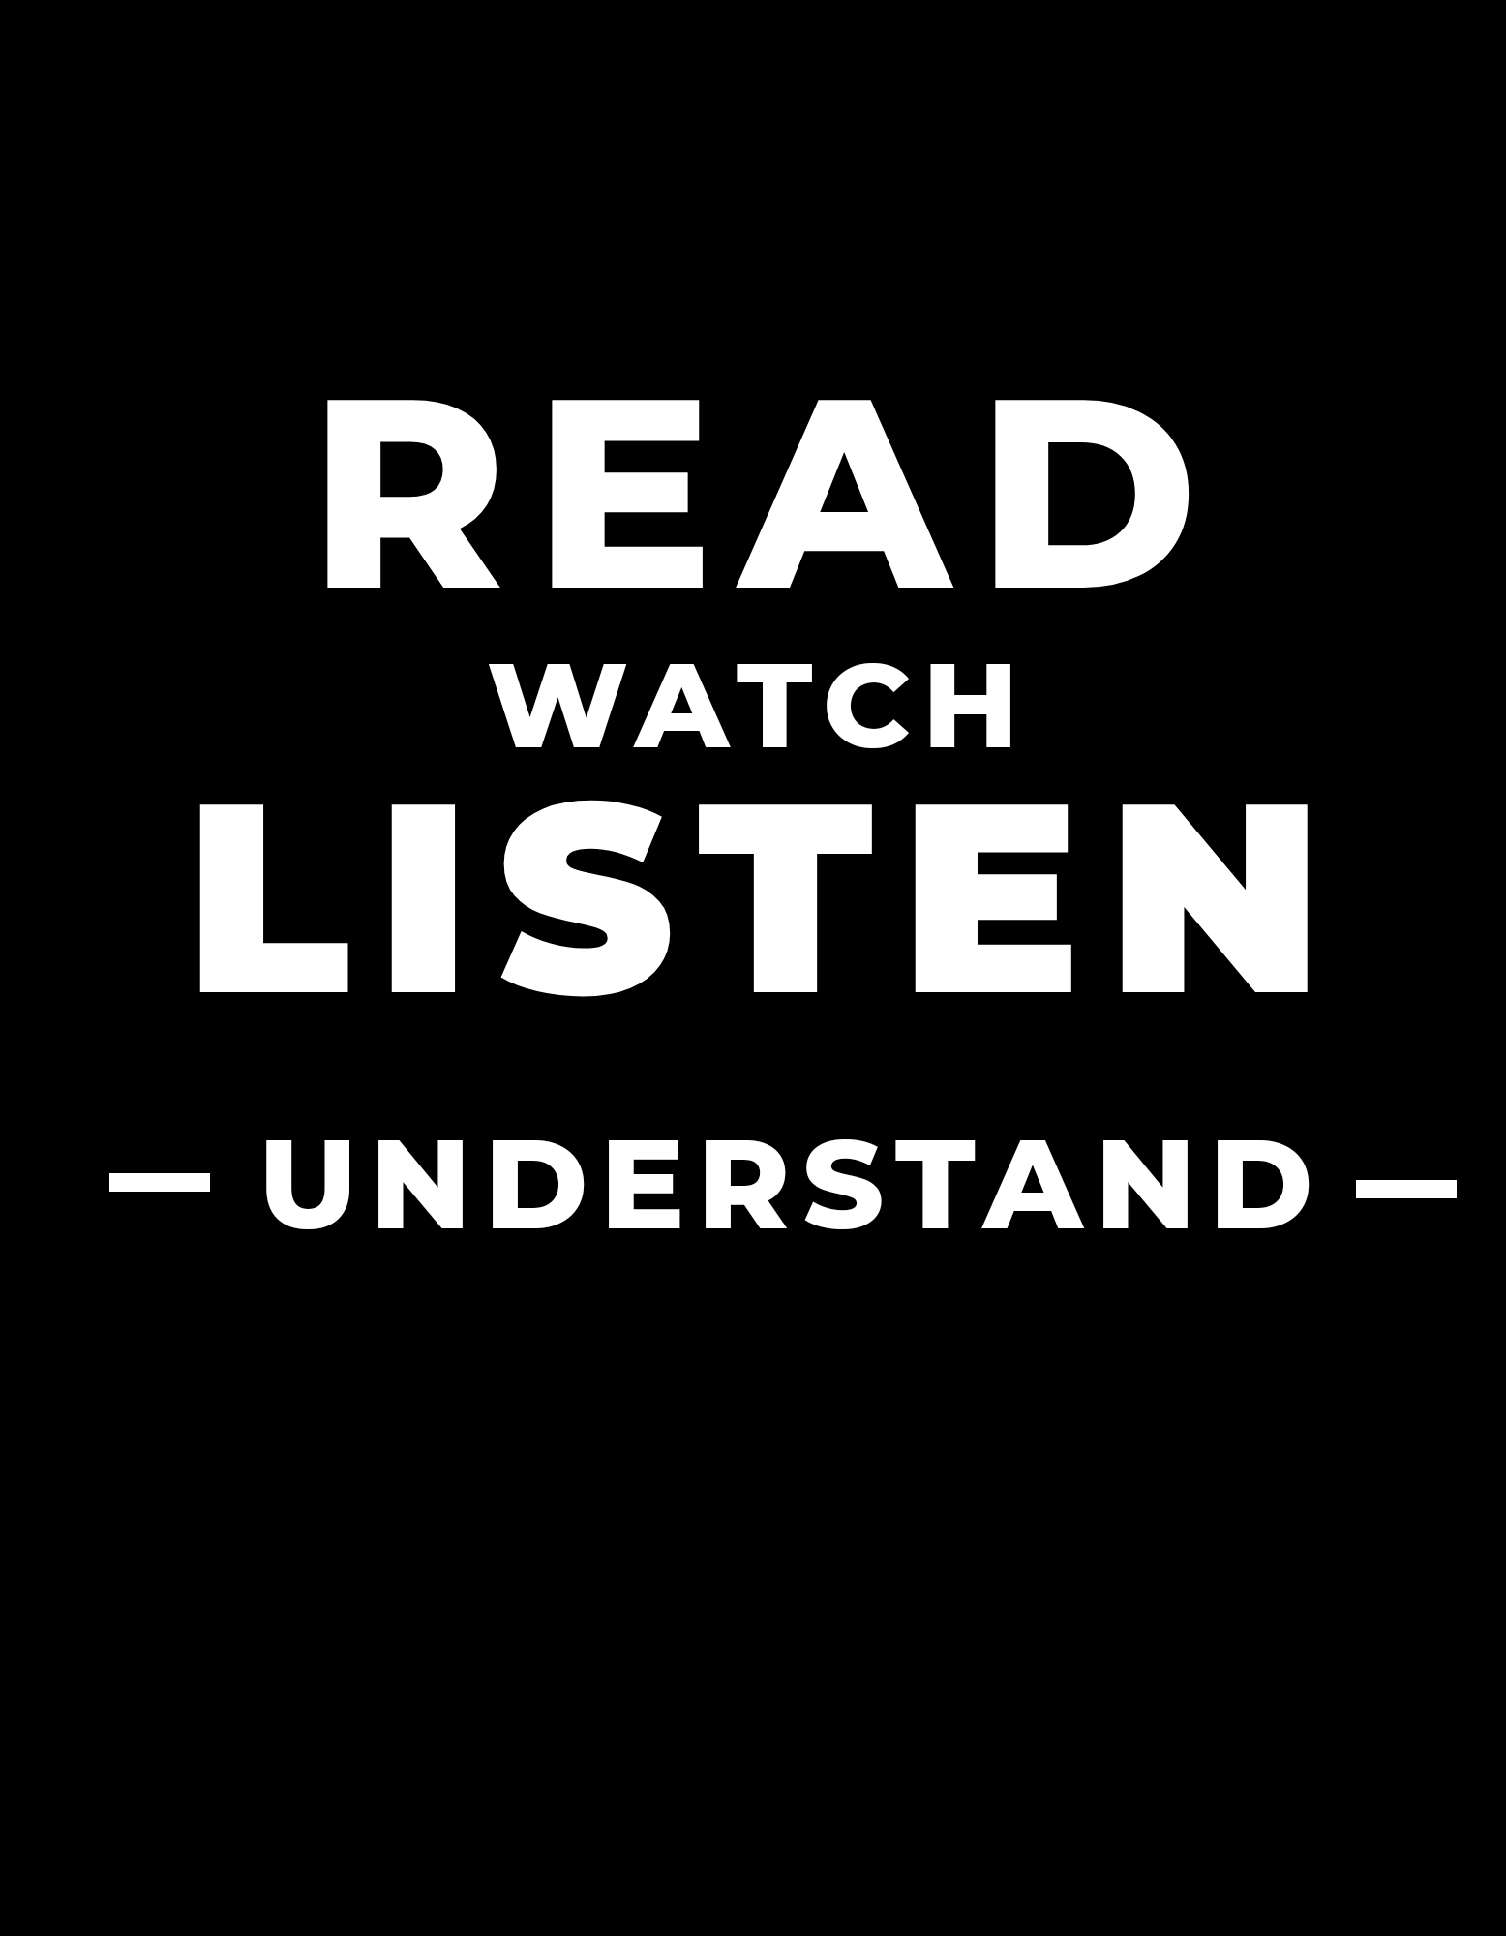 white letters on black background reading "Read. Watch. Listen. Understand."